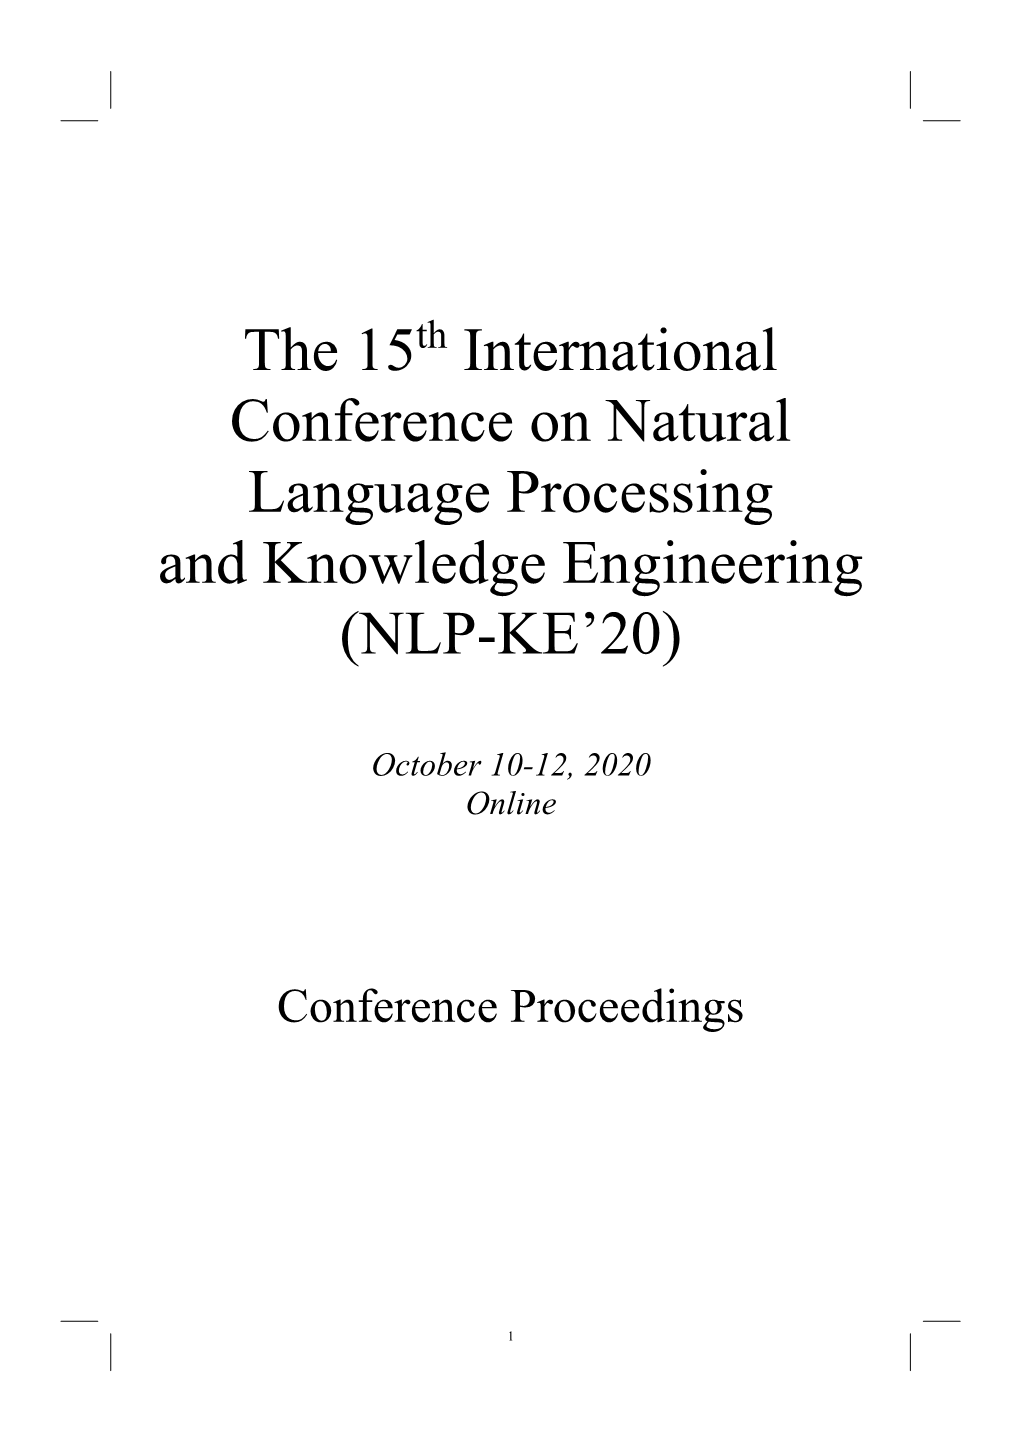 Conference Proceedings(PDF File)